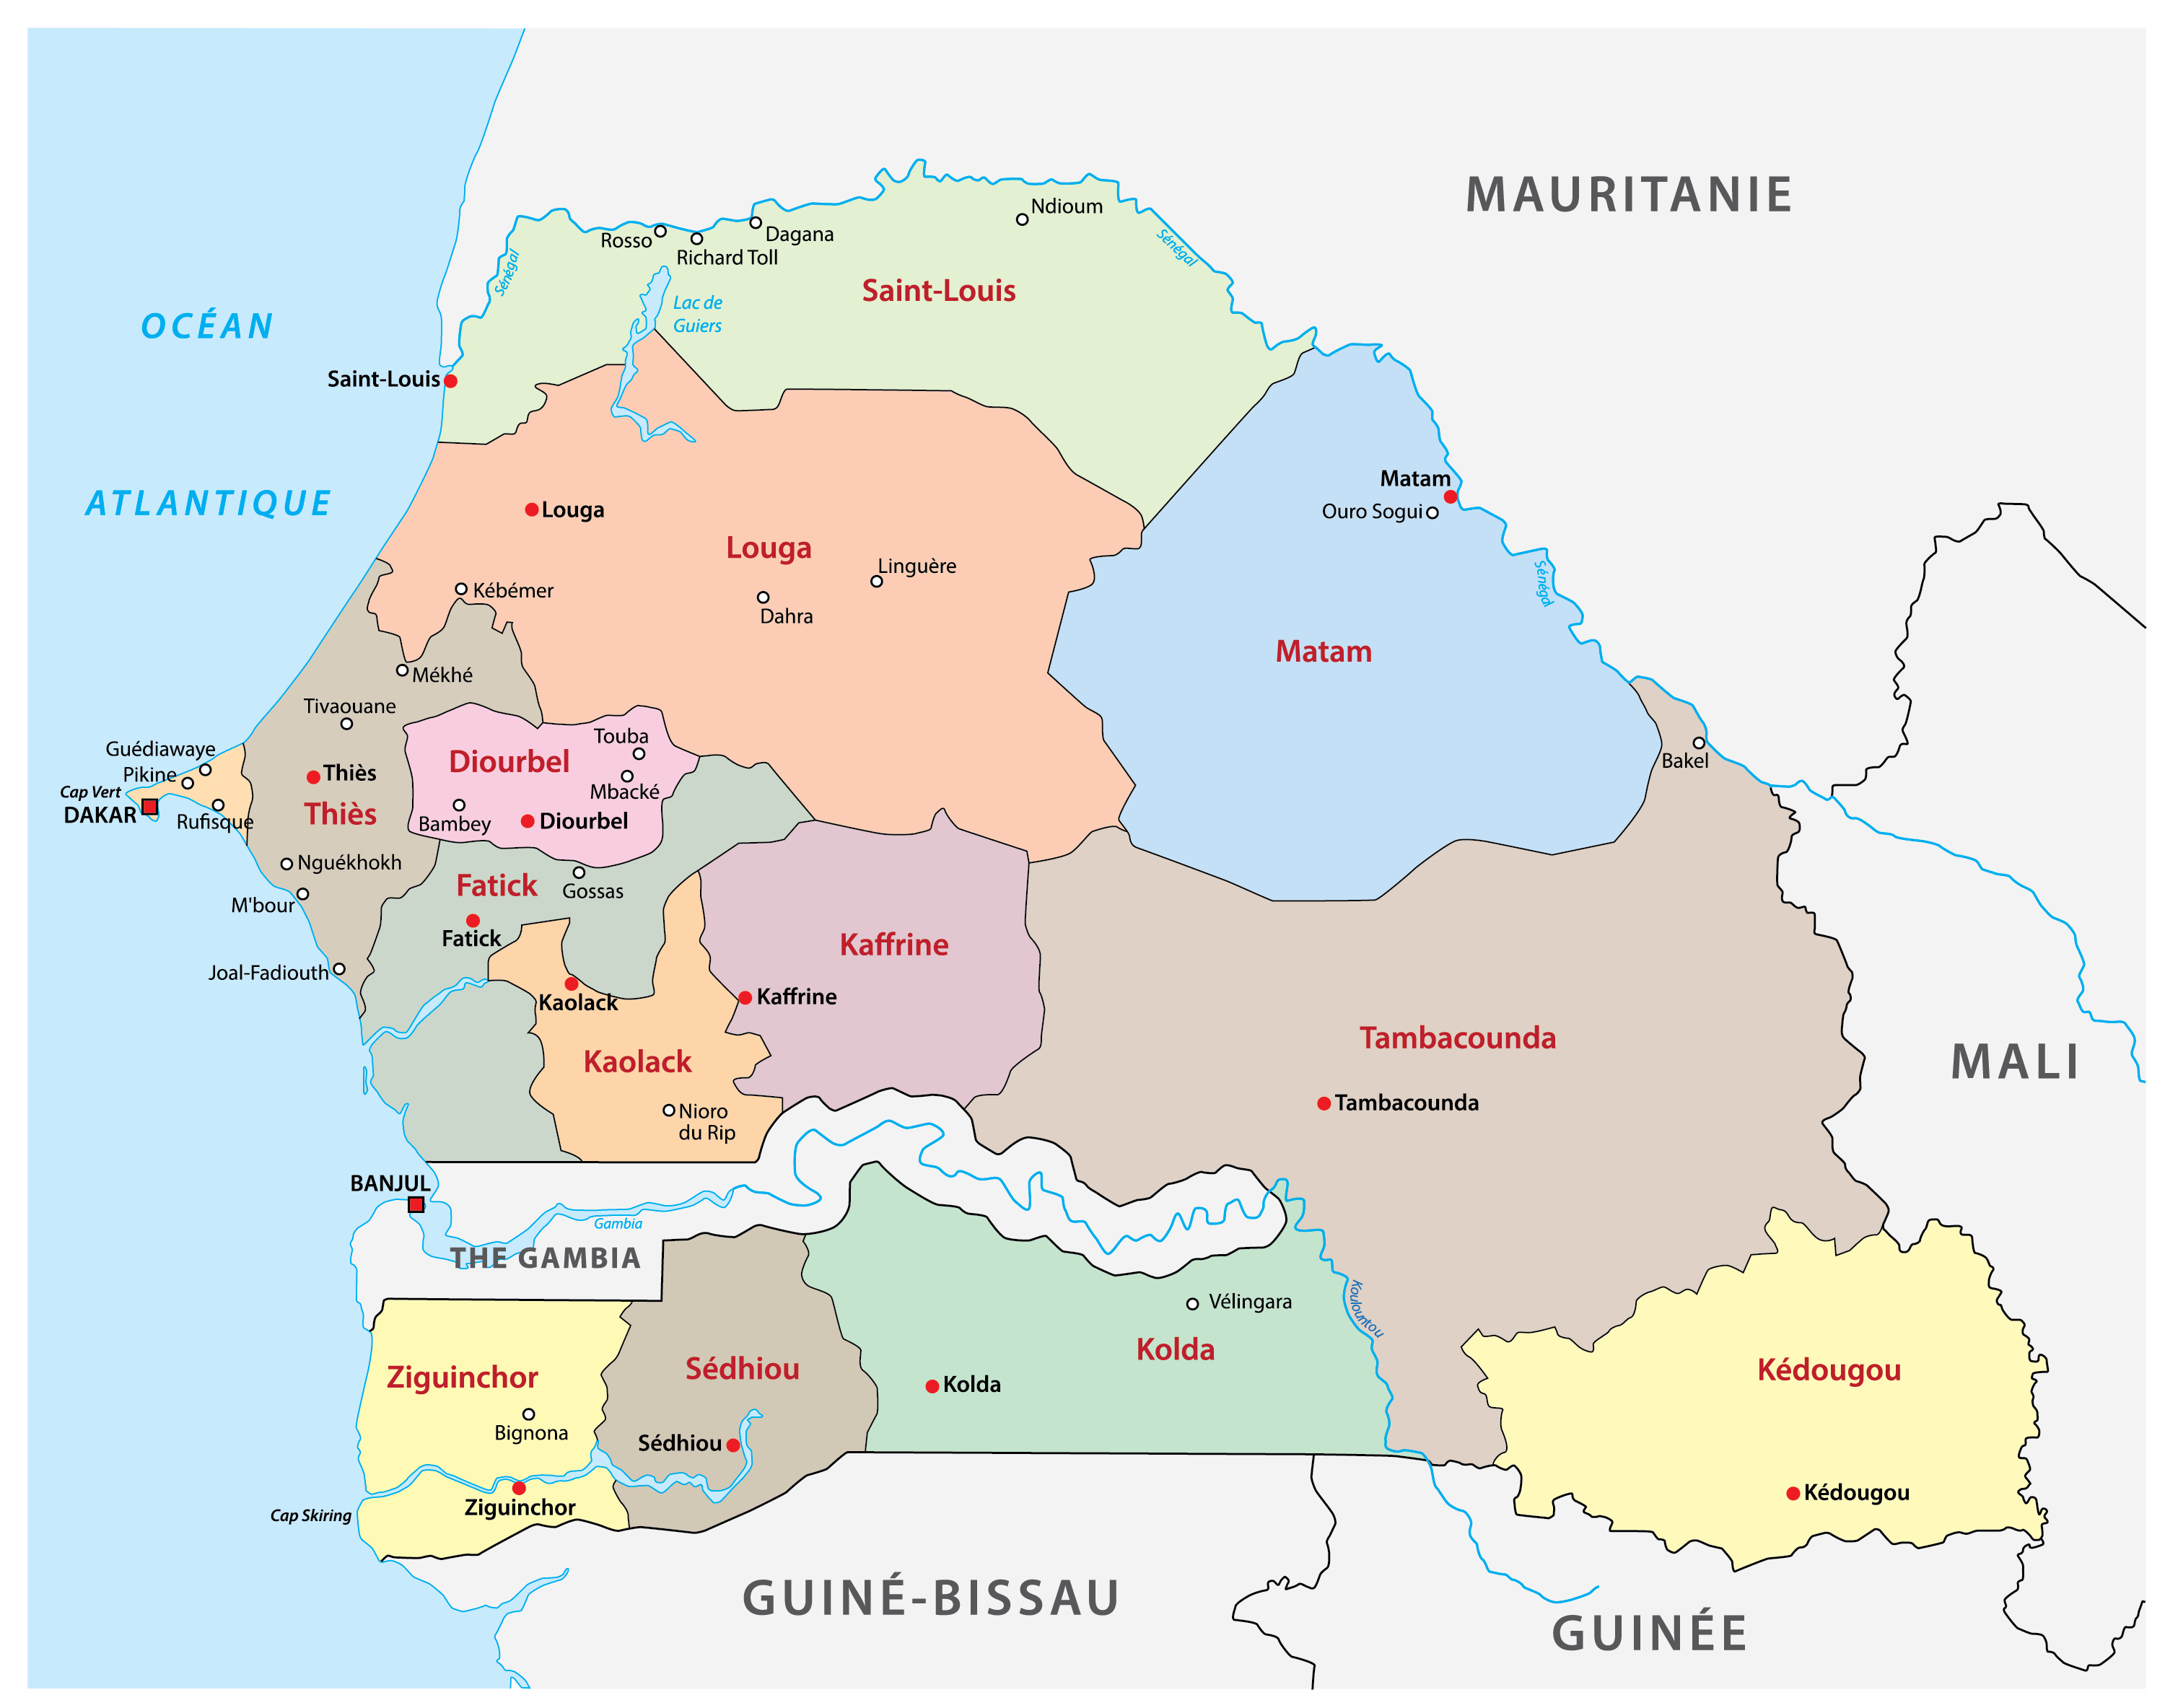 Senegal Maps Facts World Atlas